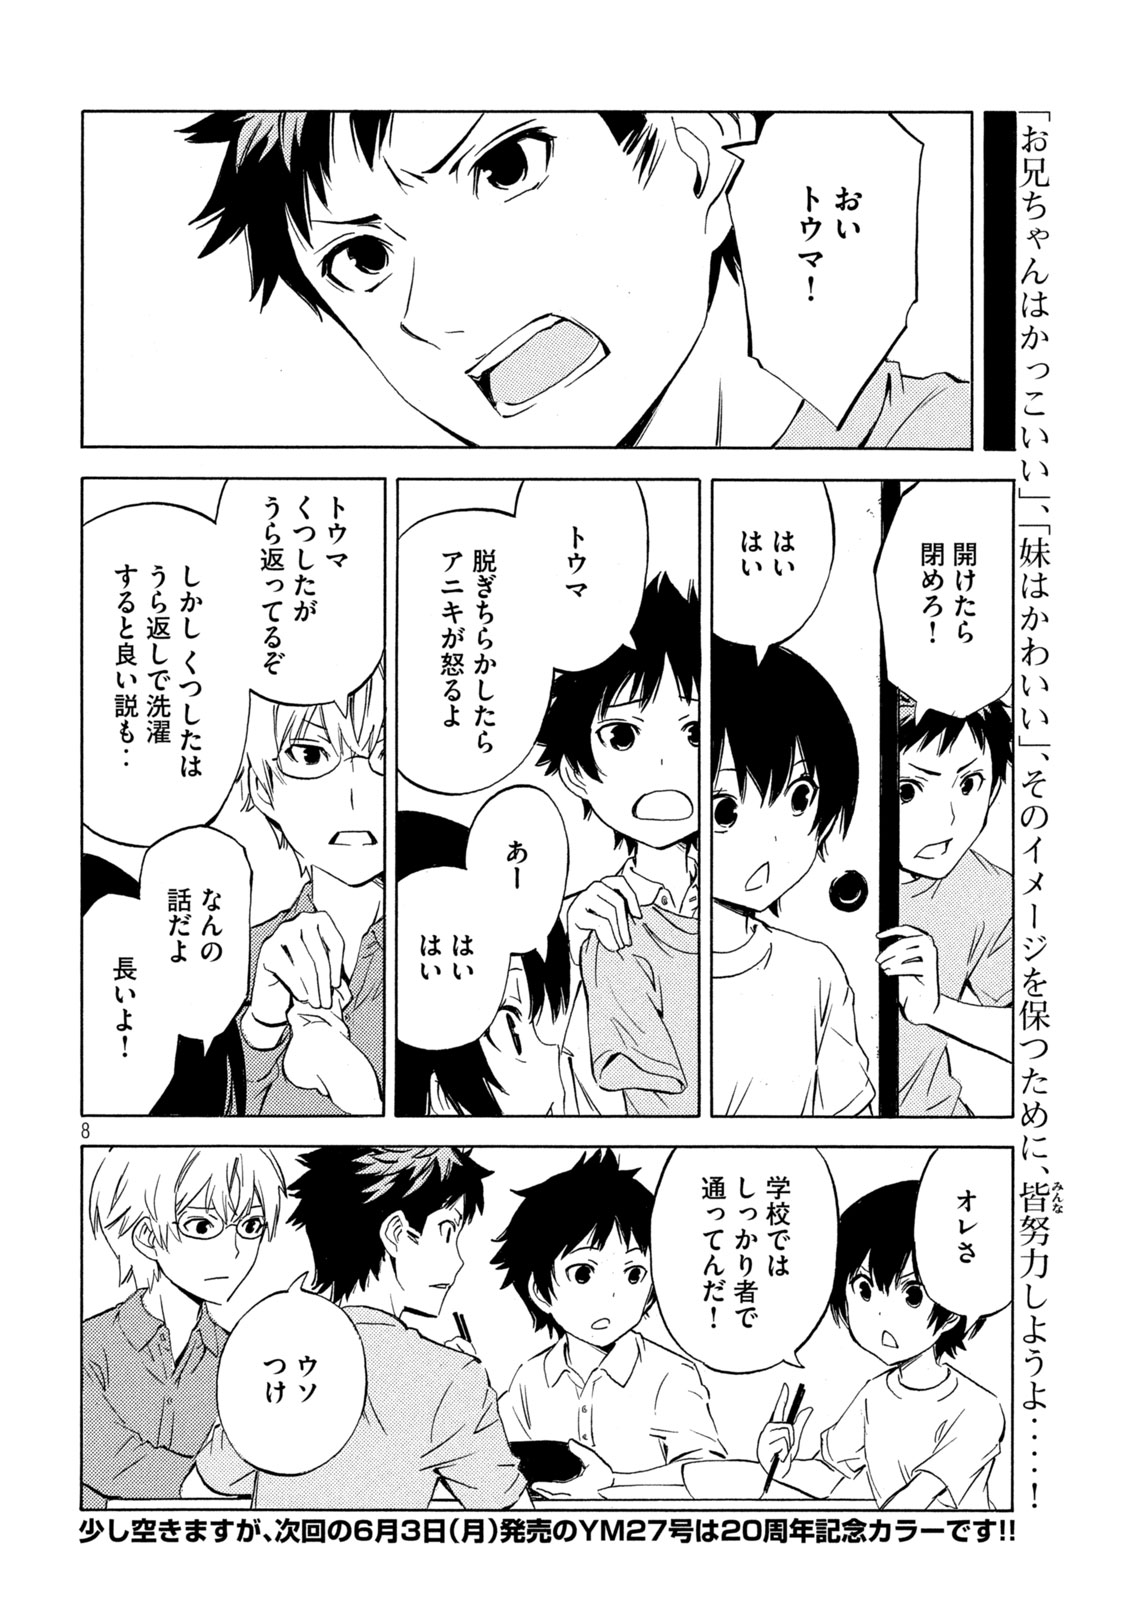 Minami-ke - Chapter 484 - Page 8